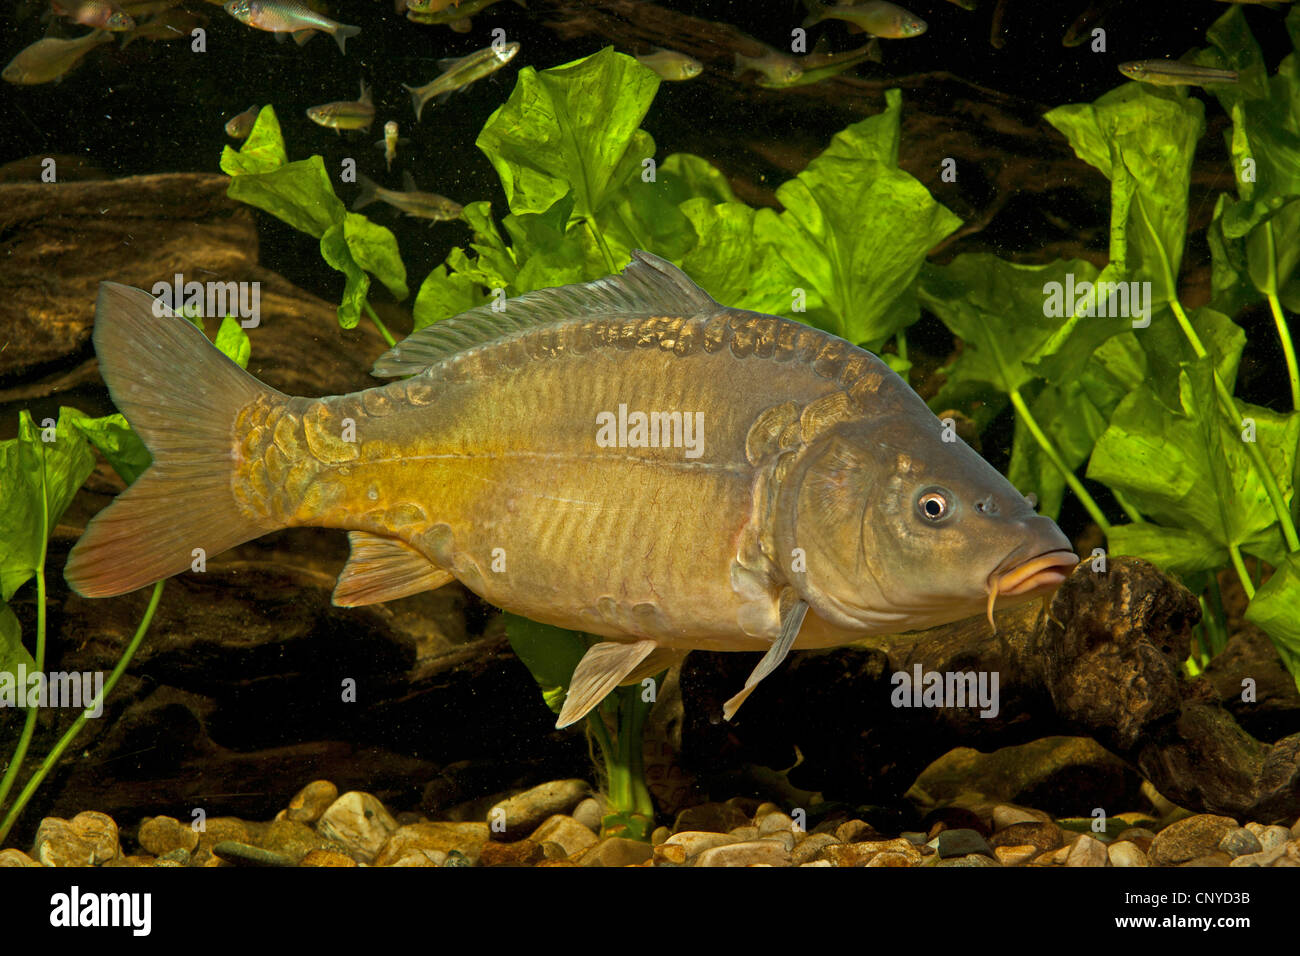 carp, common carp, European carp (Cyprinus carpio), mirror carp at the pebble ground of a water Stock Photo